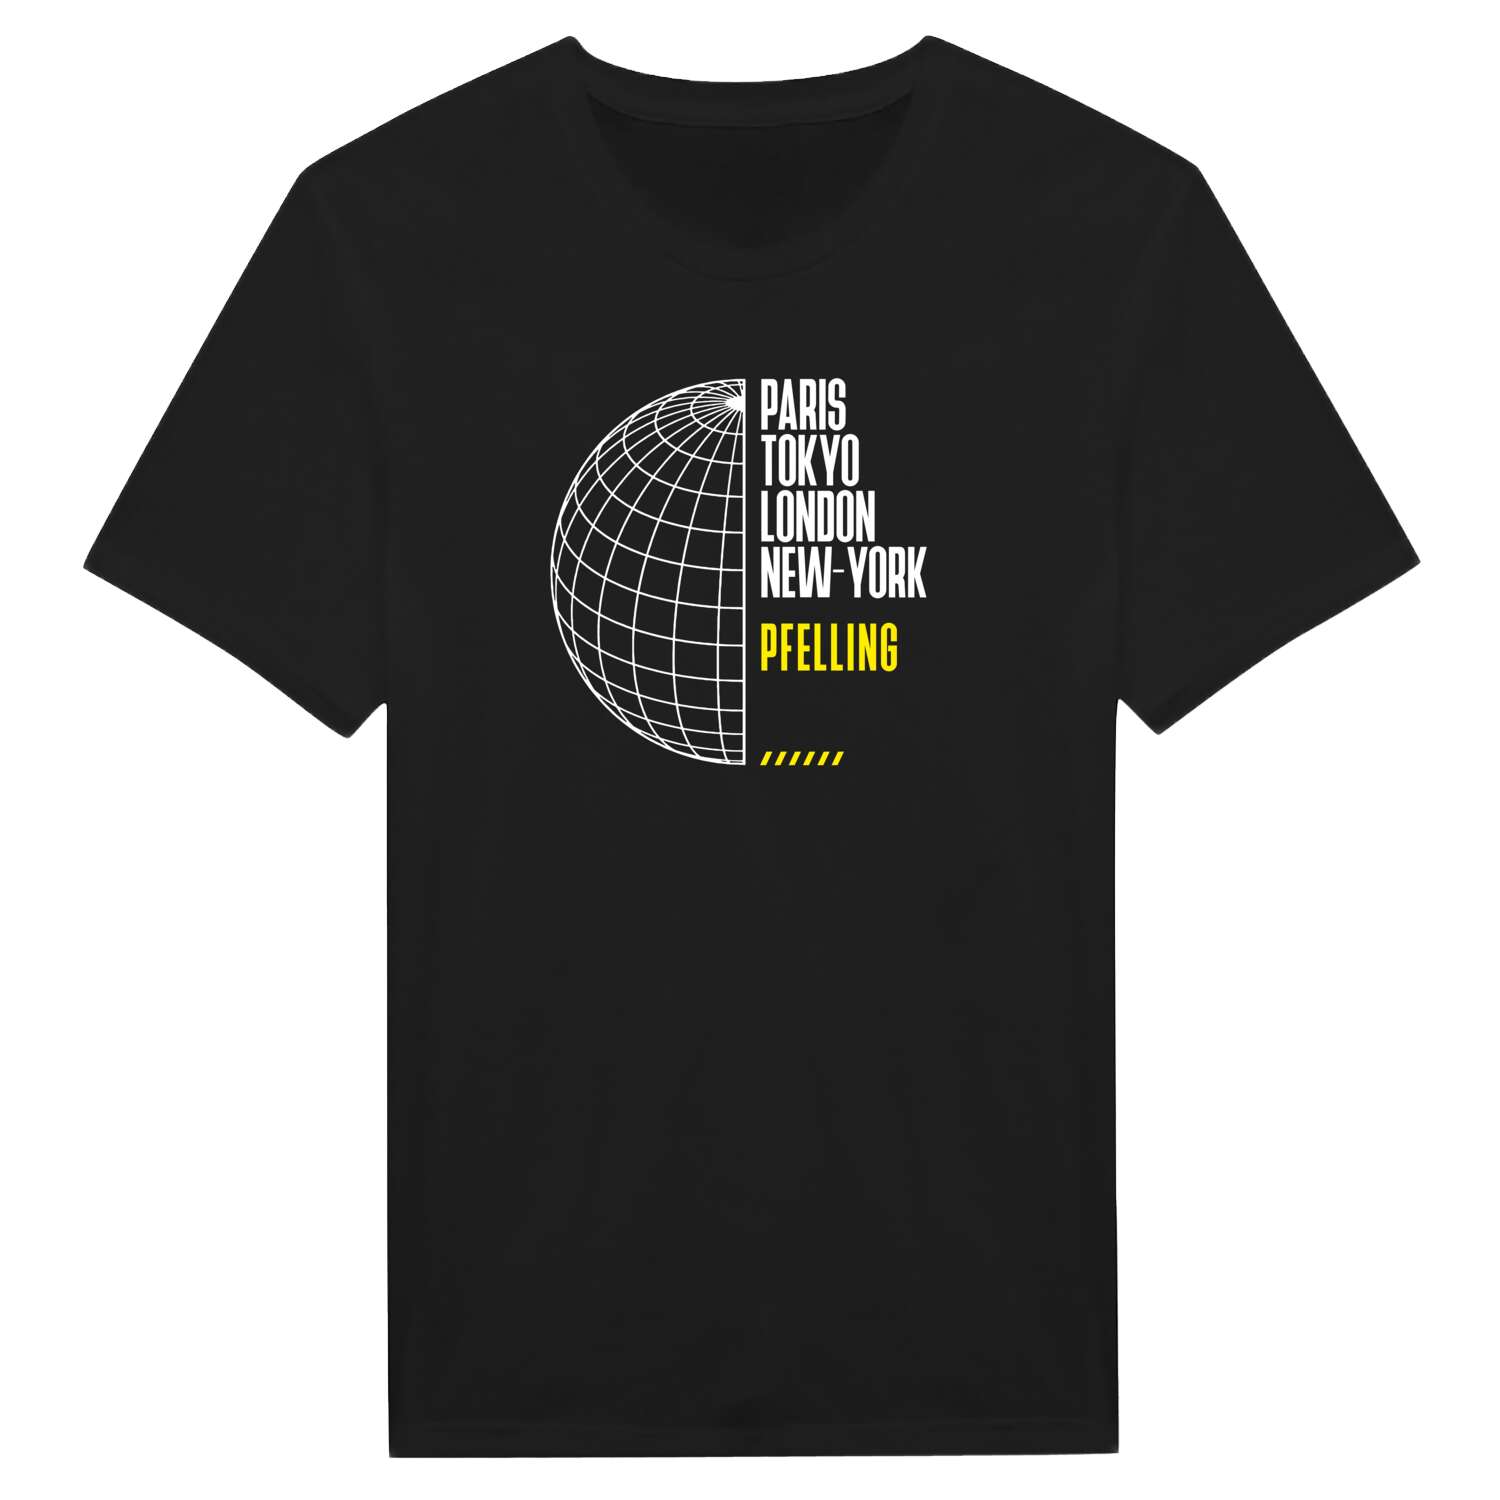 Pfelling T-Shirt »Paris Tokyo London«